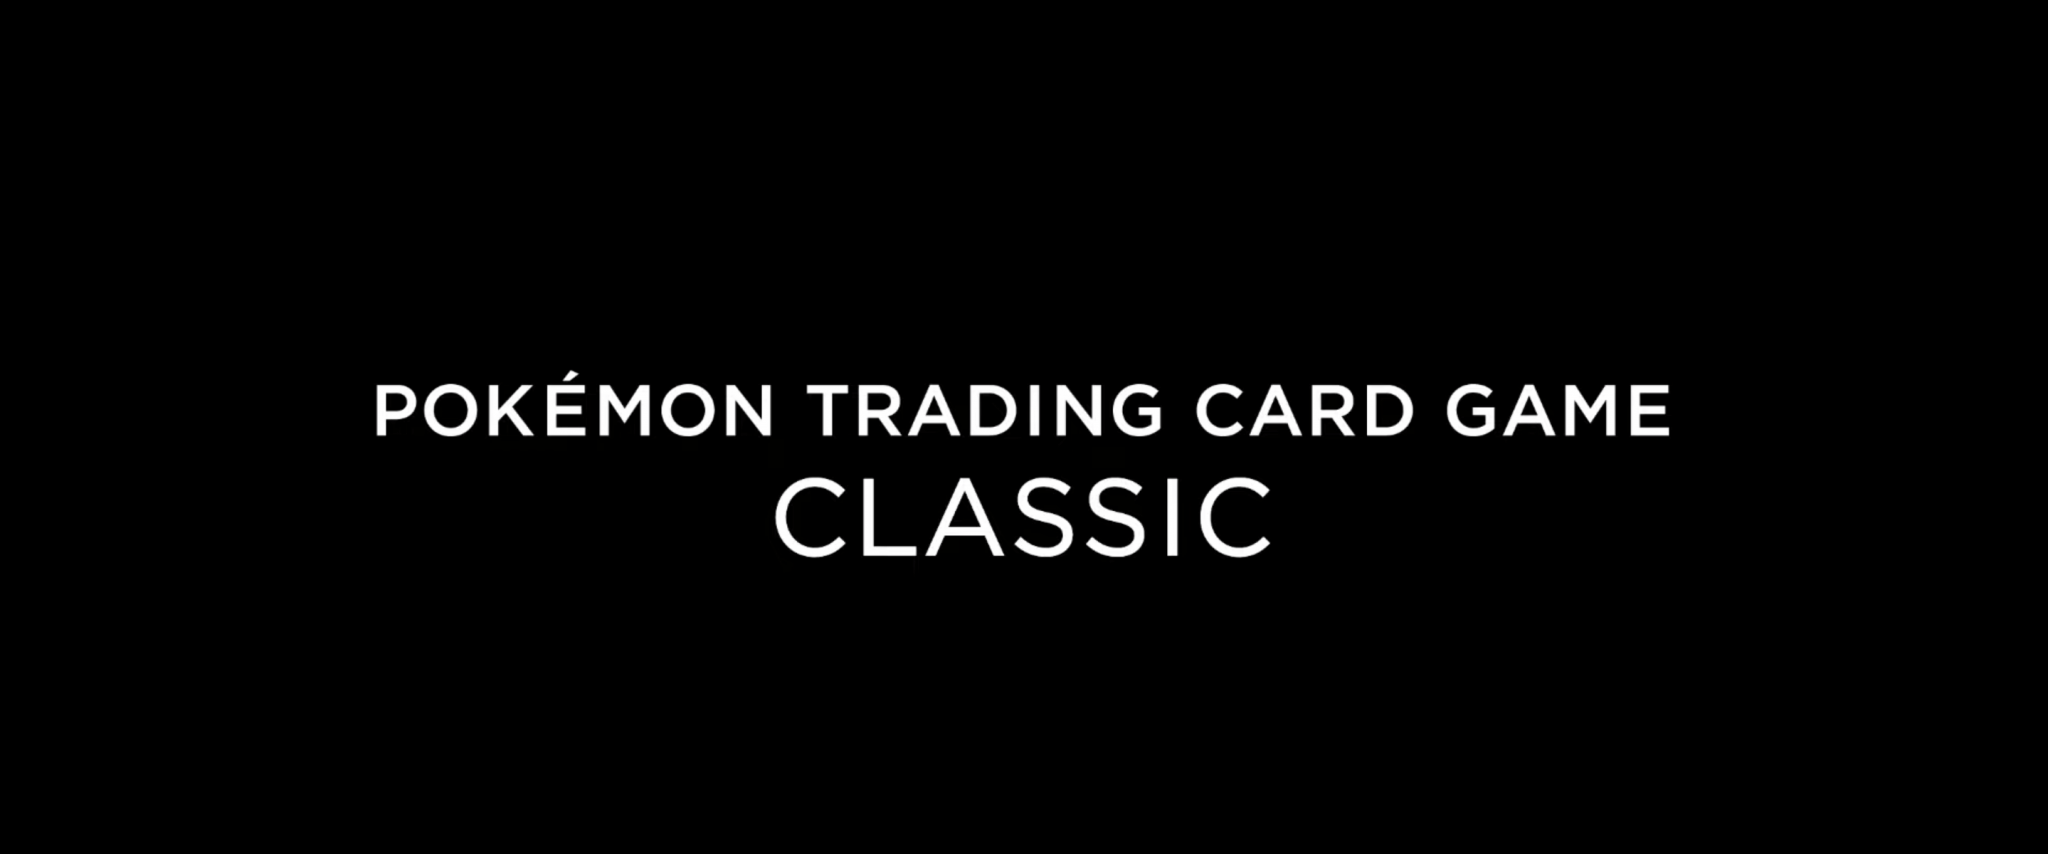 pok-mon-classic-sees-reissue-of-the-original-pok-mon-cards-phandroid